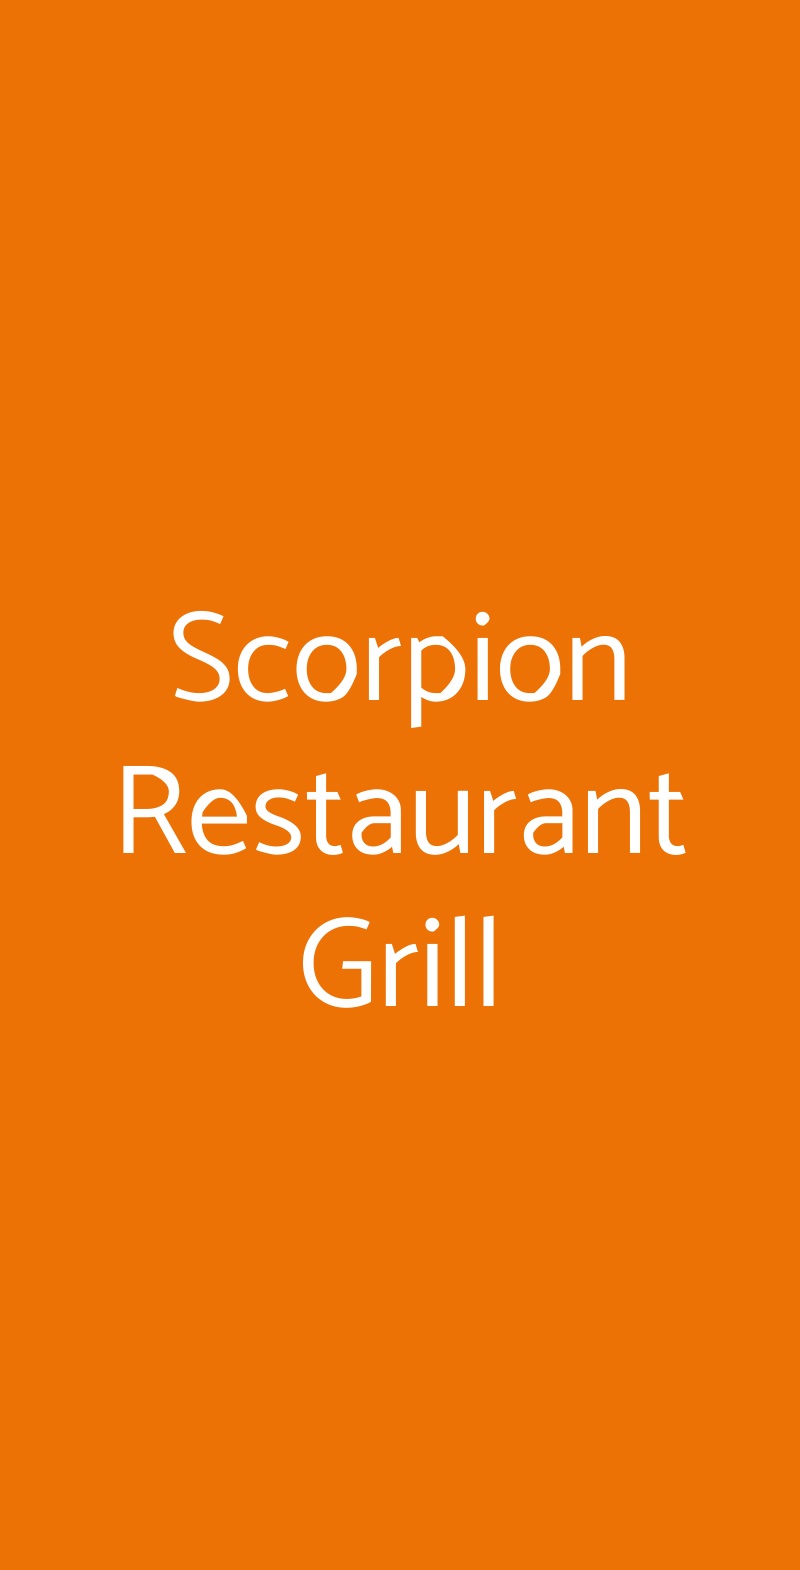 Scorpion Restaurant Grill Milano menù 1 pagina